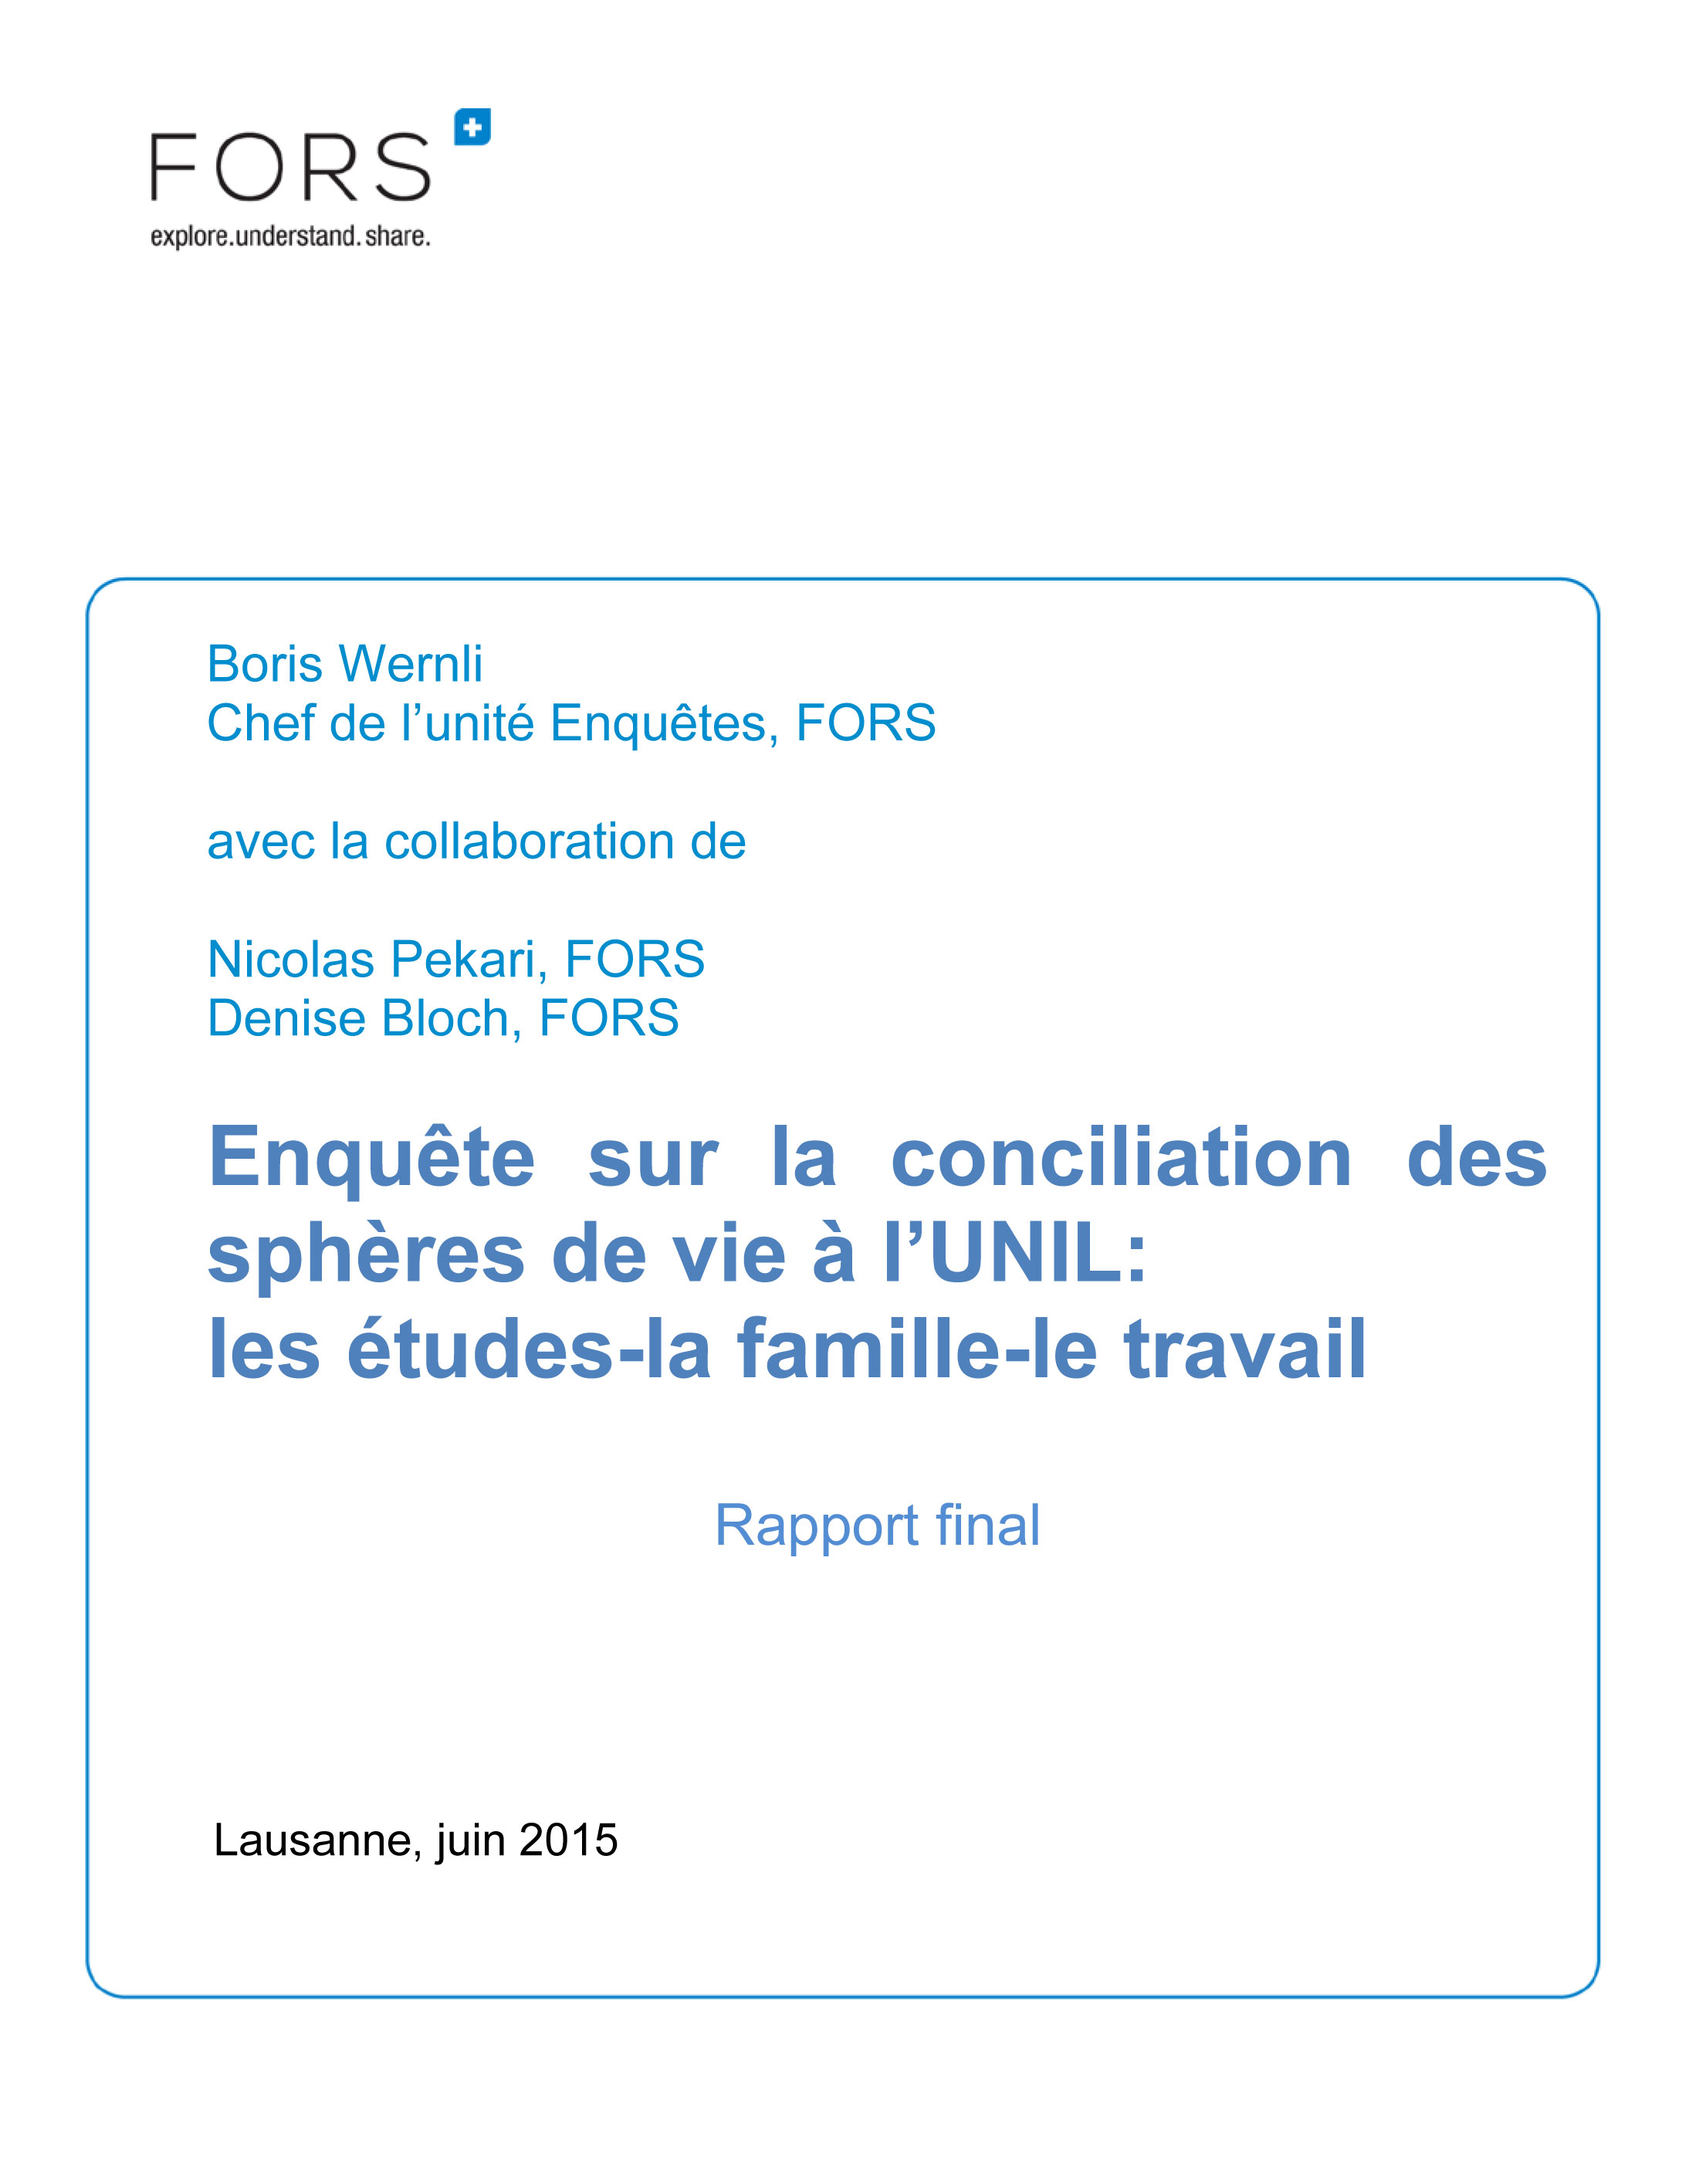 Rapport.jpg (conciliation_rapport.pdf)